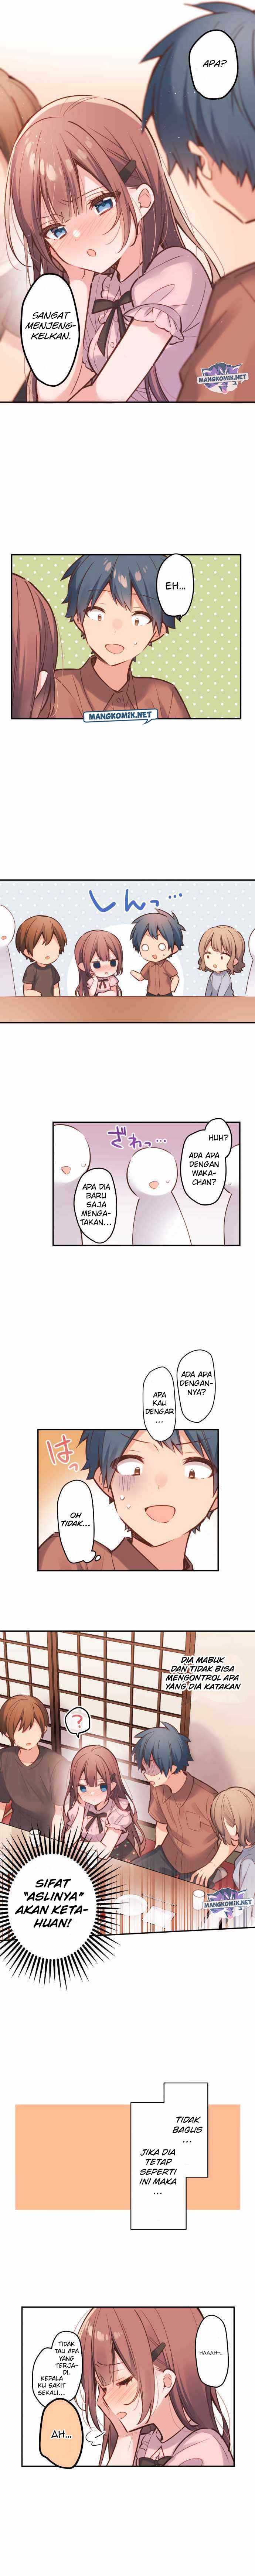 Waka-chan Is Flirty Again Chapter 10